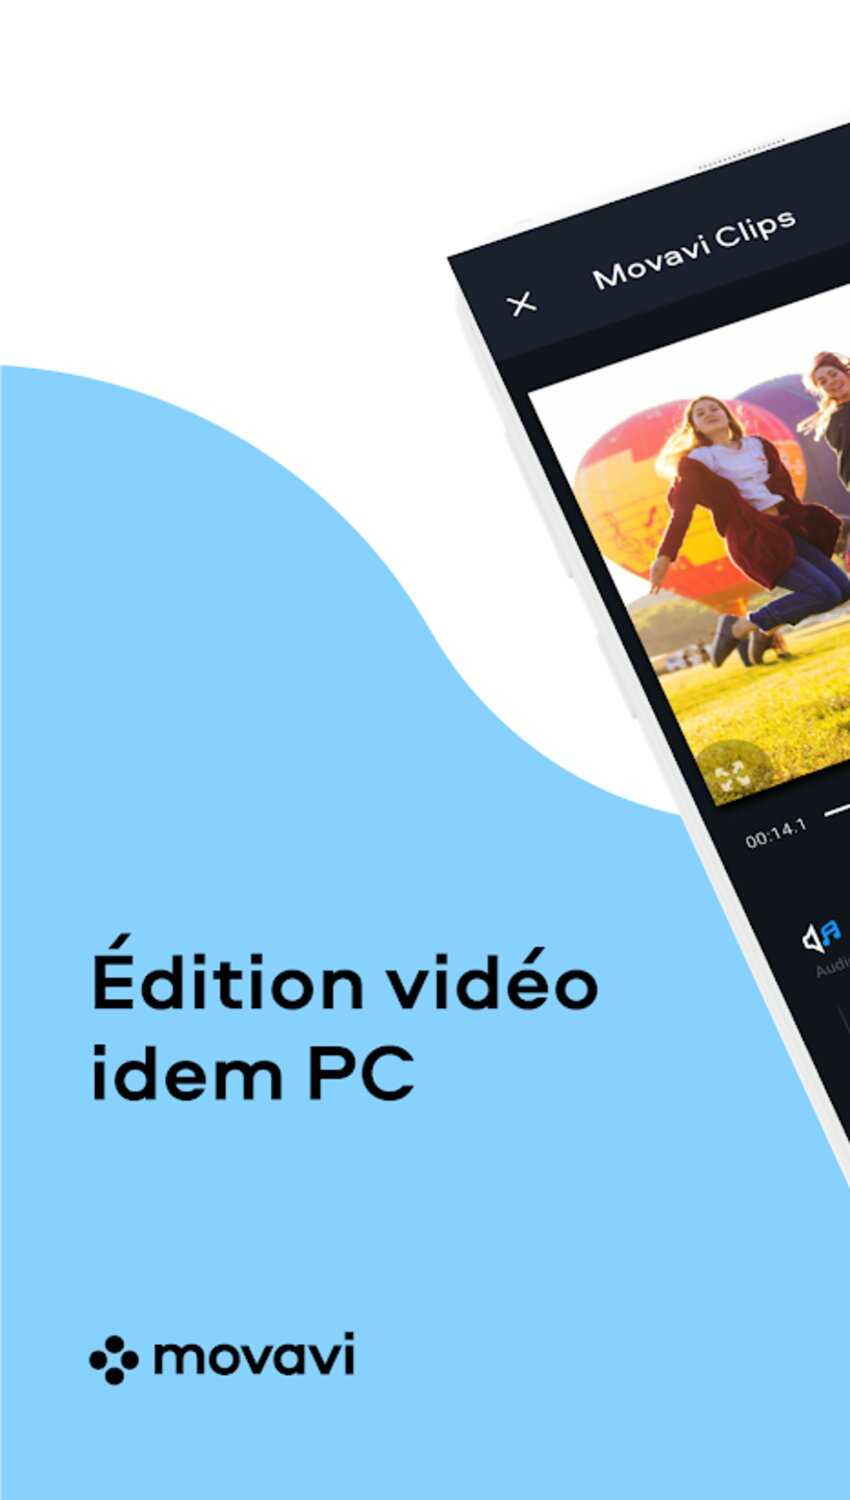 Video Editor Movavi Clips – Video Editor with Slideshows v4.13.0 (Premium) APK